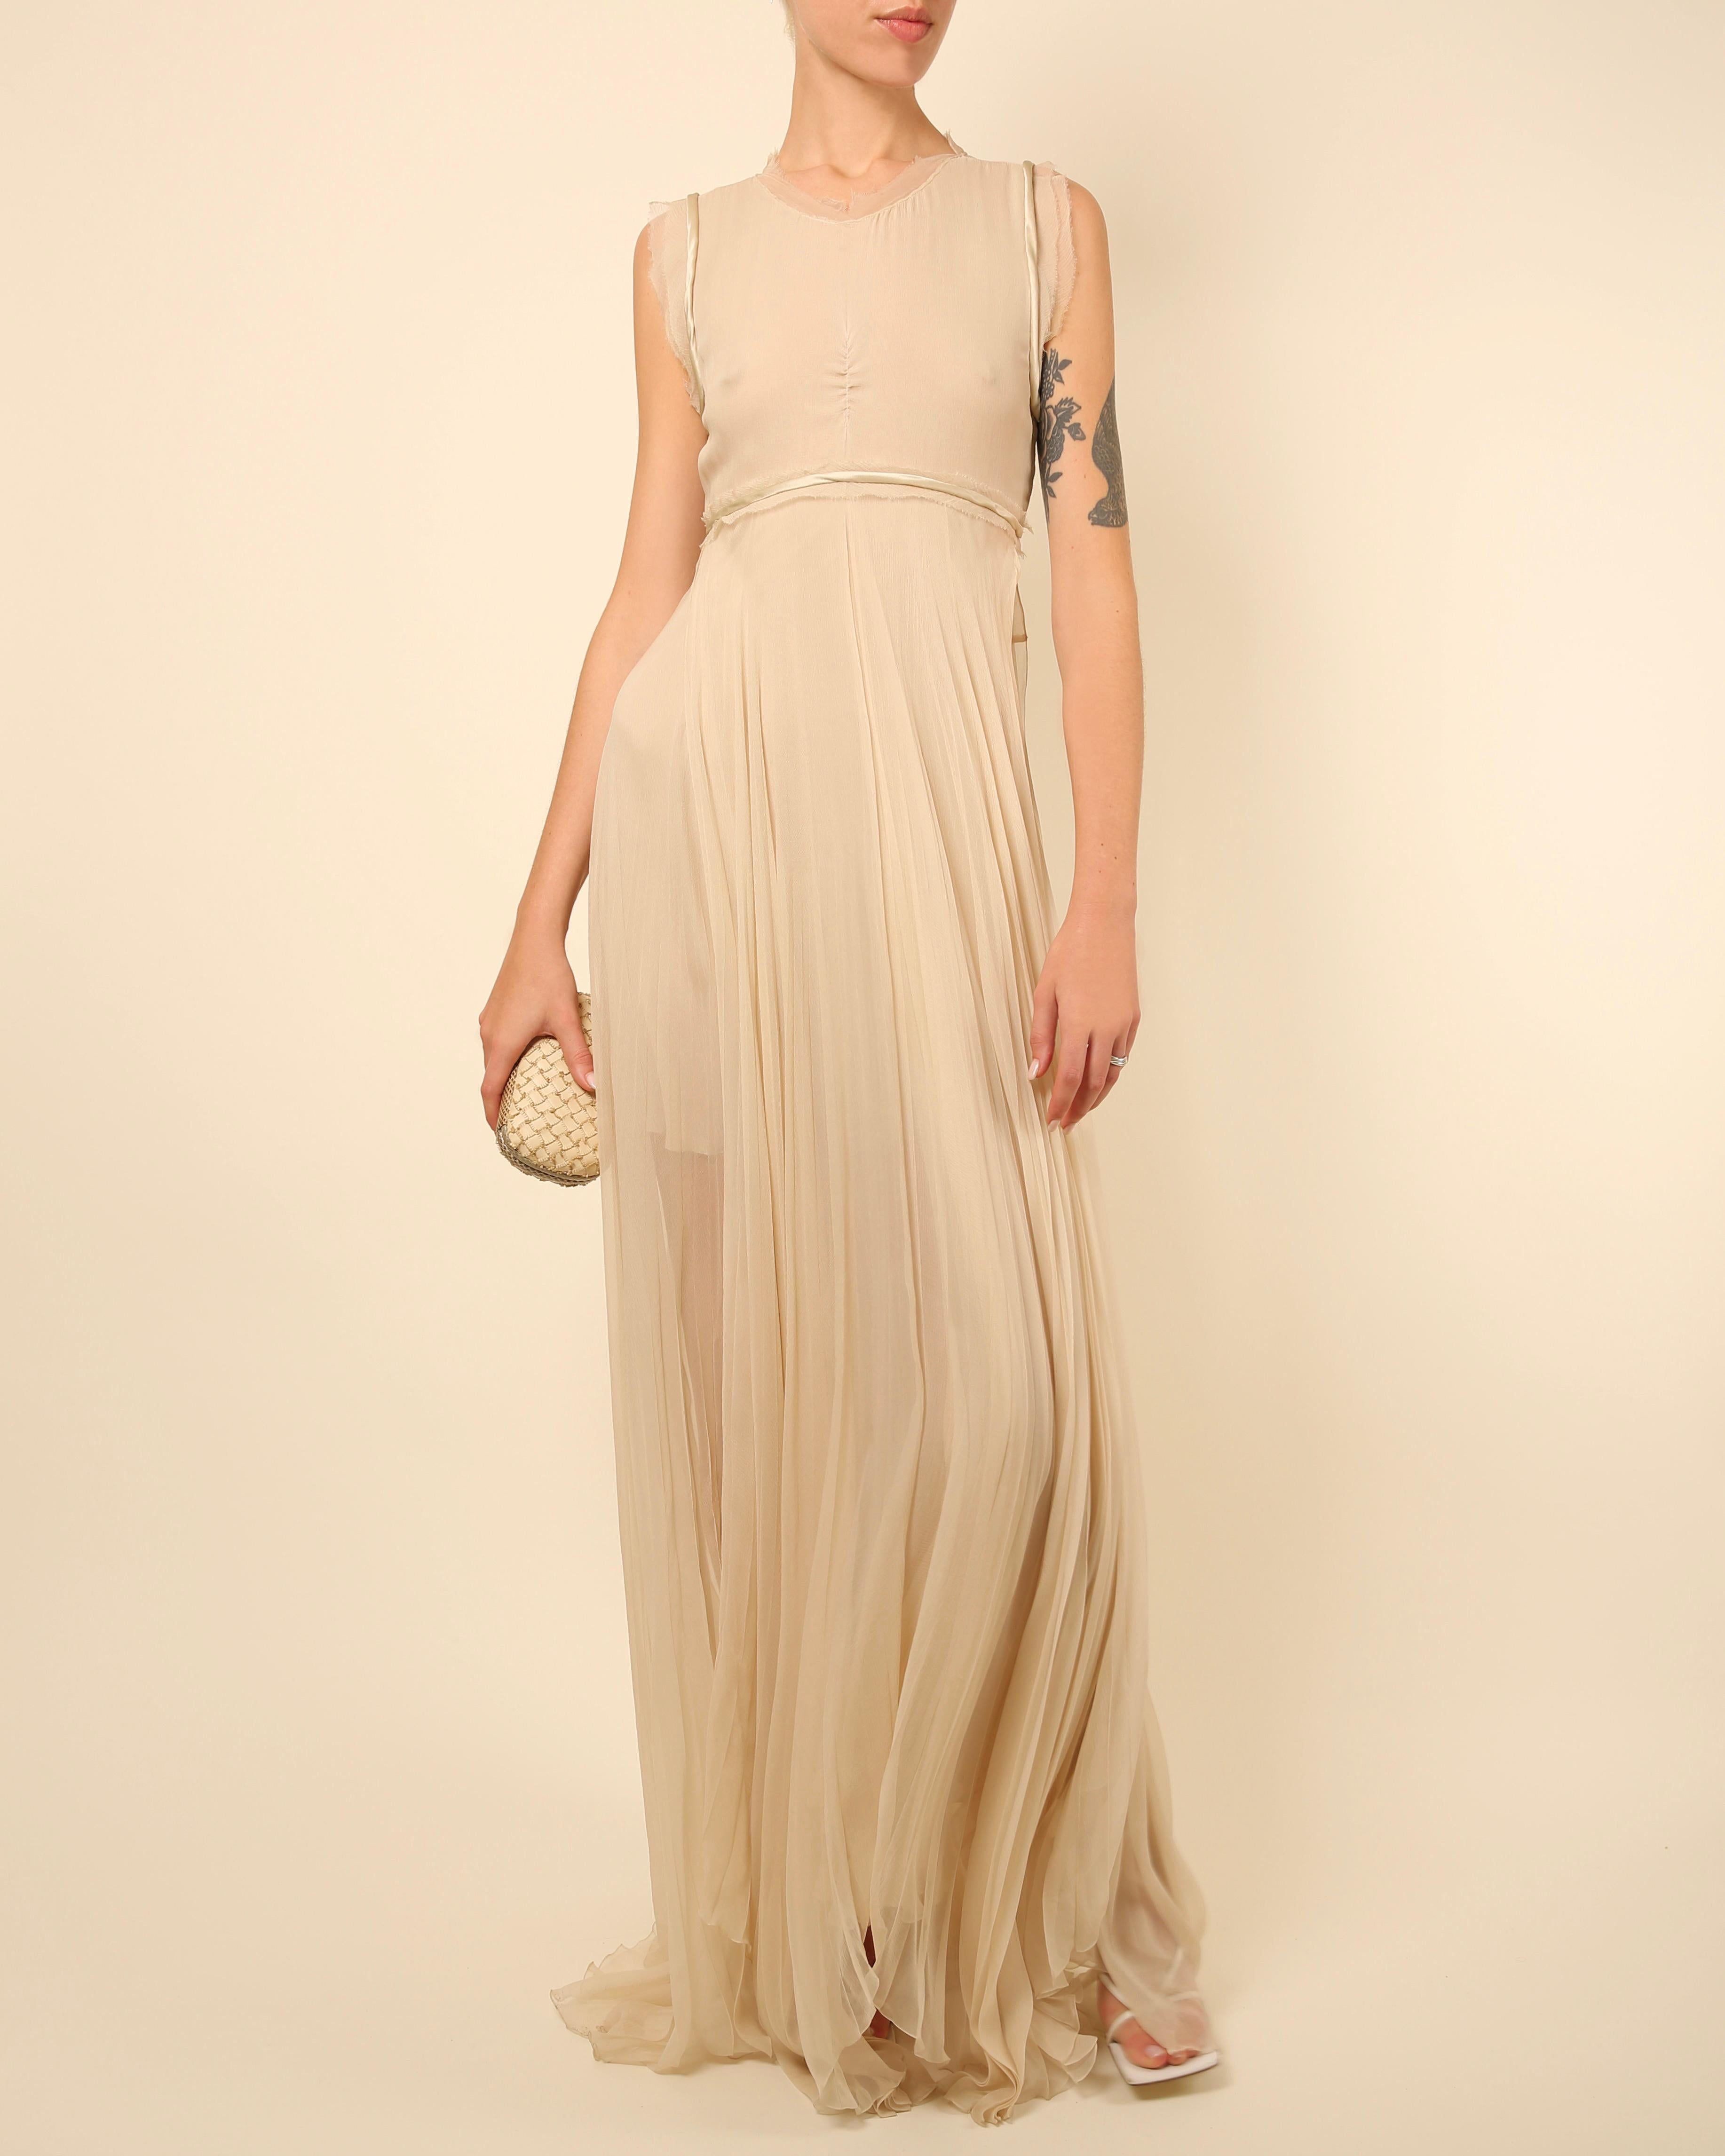 Beige Chloe S/S10 ivory white beige chiffon silk layered sleeveless wedding dress gown For Sale